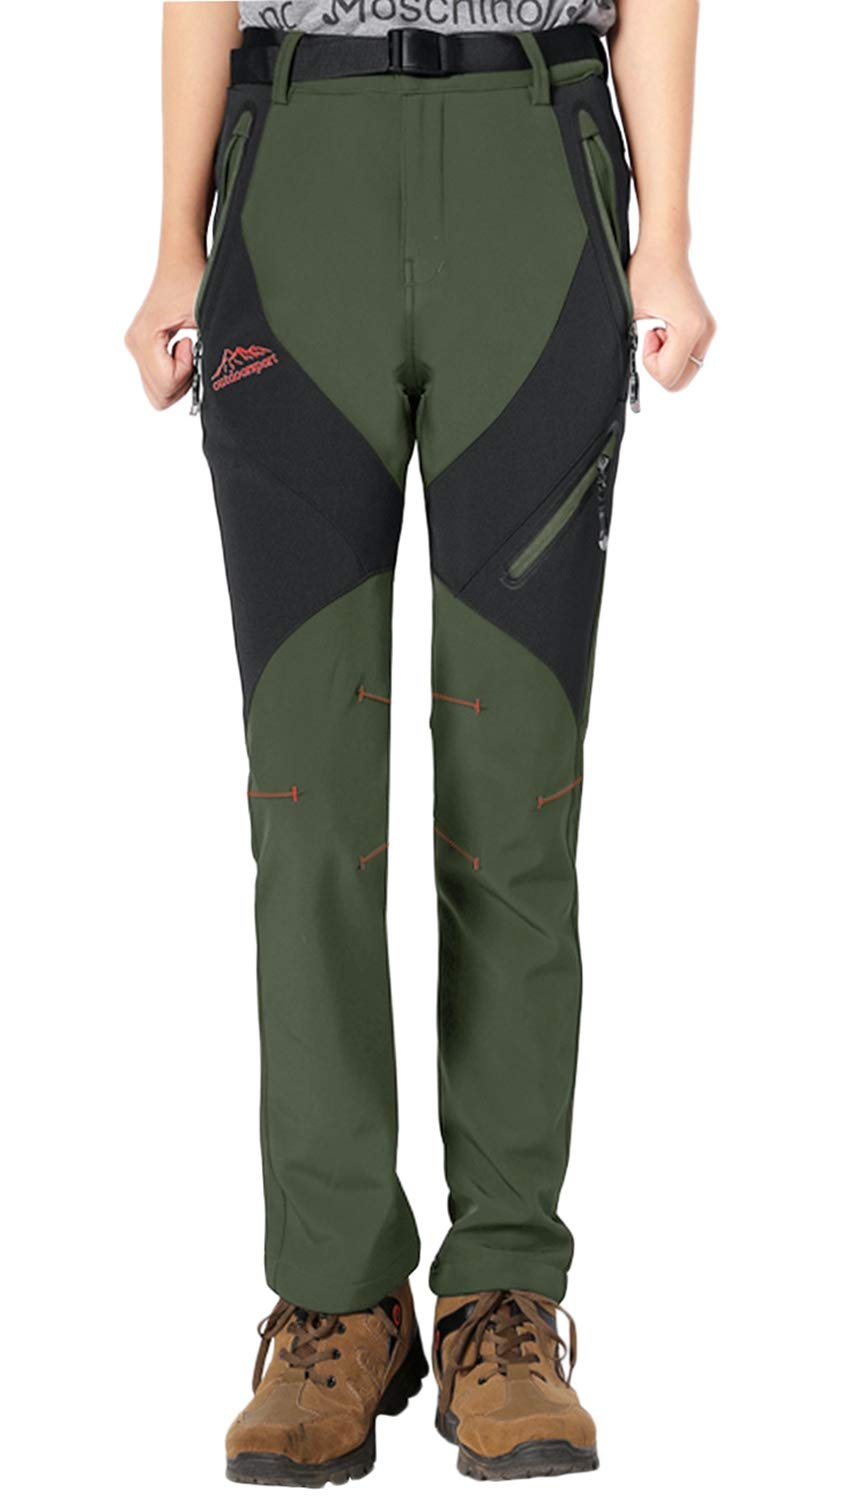 Rdruko Women's Hiking Pants Outdoor Waterproof Windproof Softshell Fleece Slim Snow Ski Pants(Green, US M)